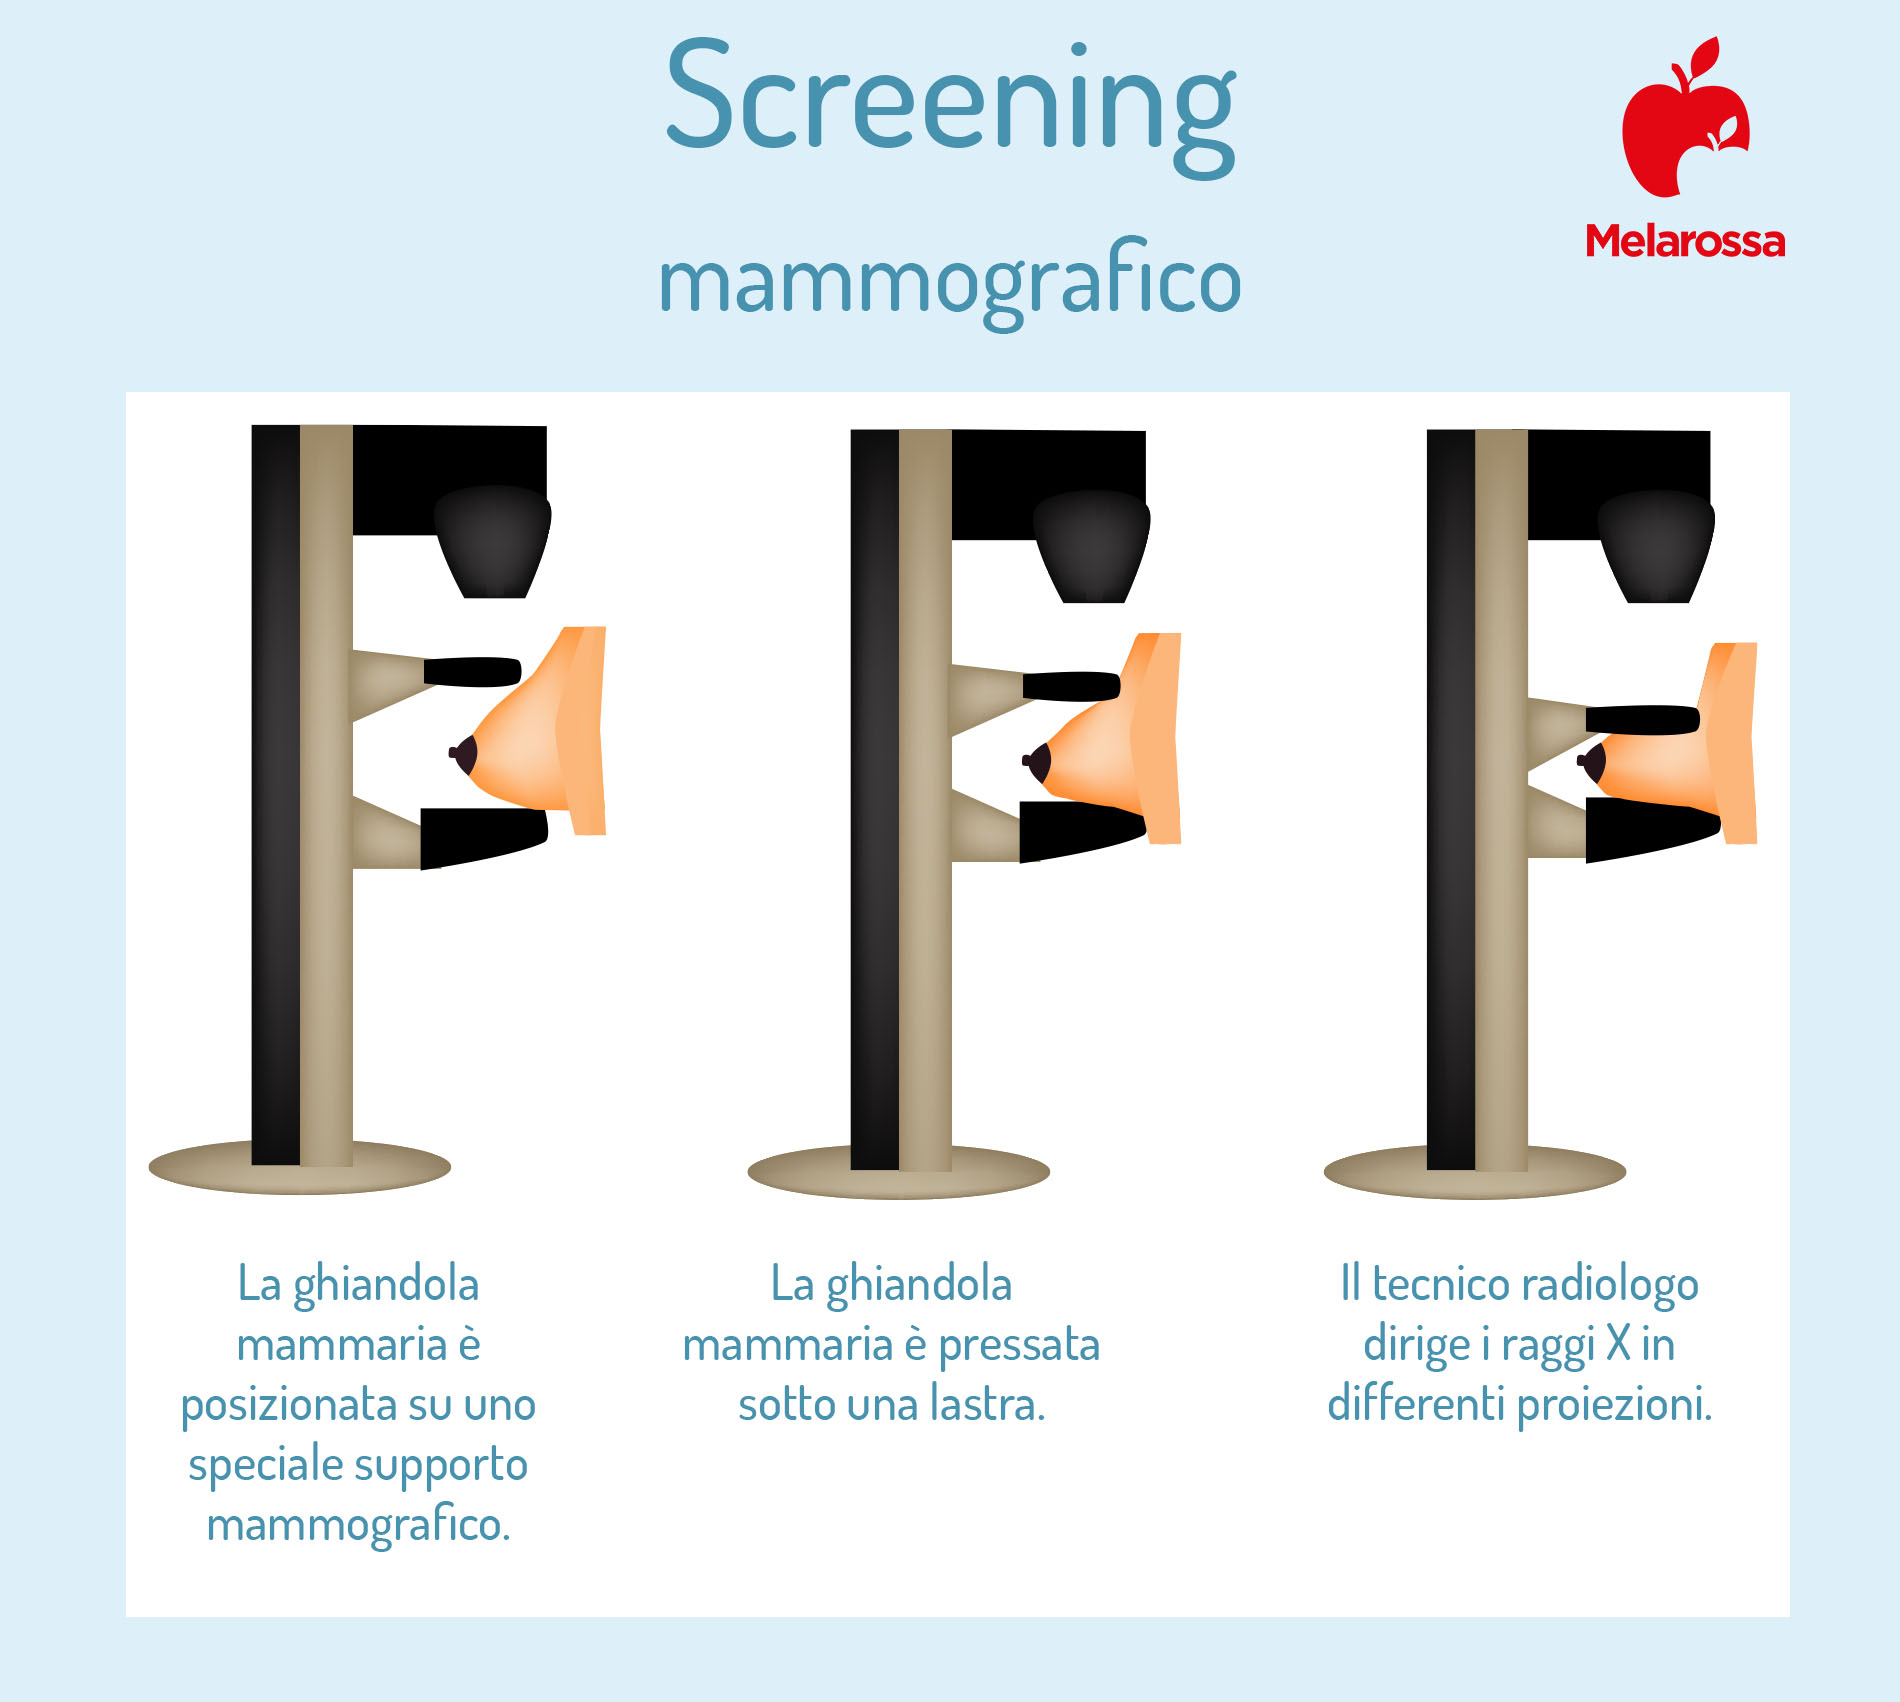 mammografia: come si esegue l'esame